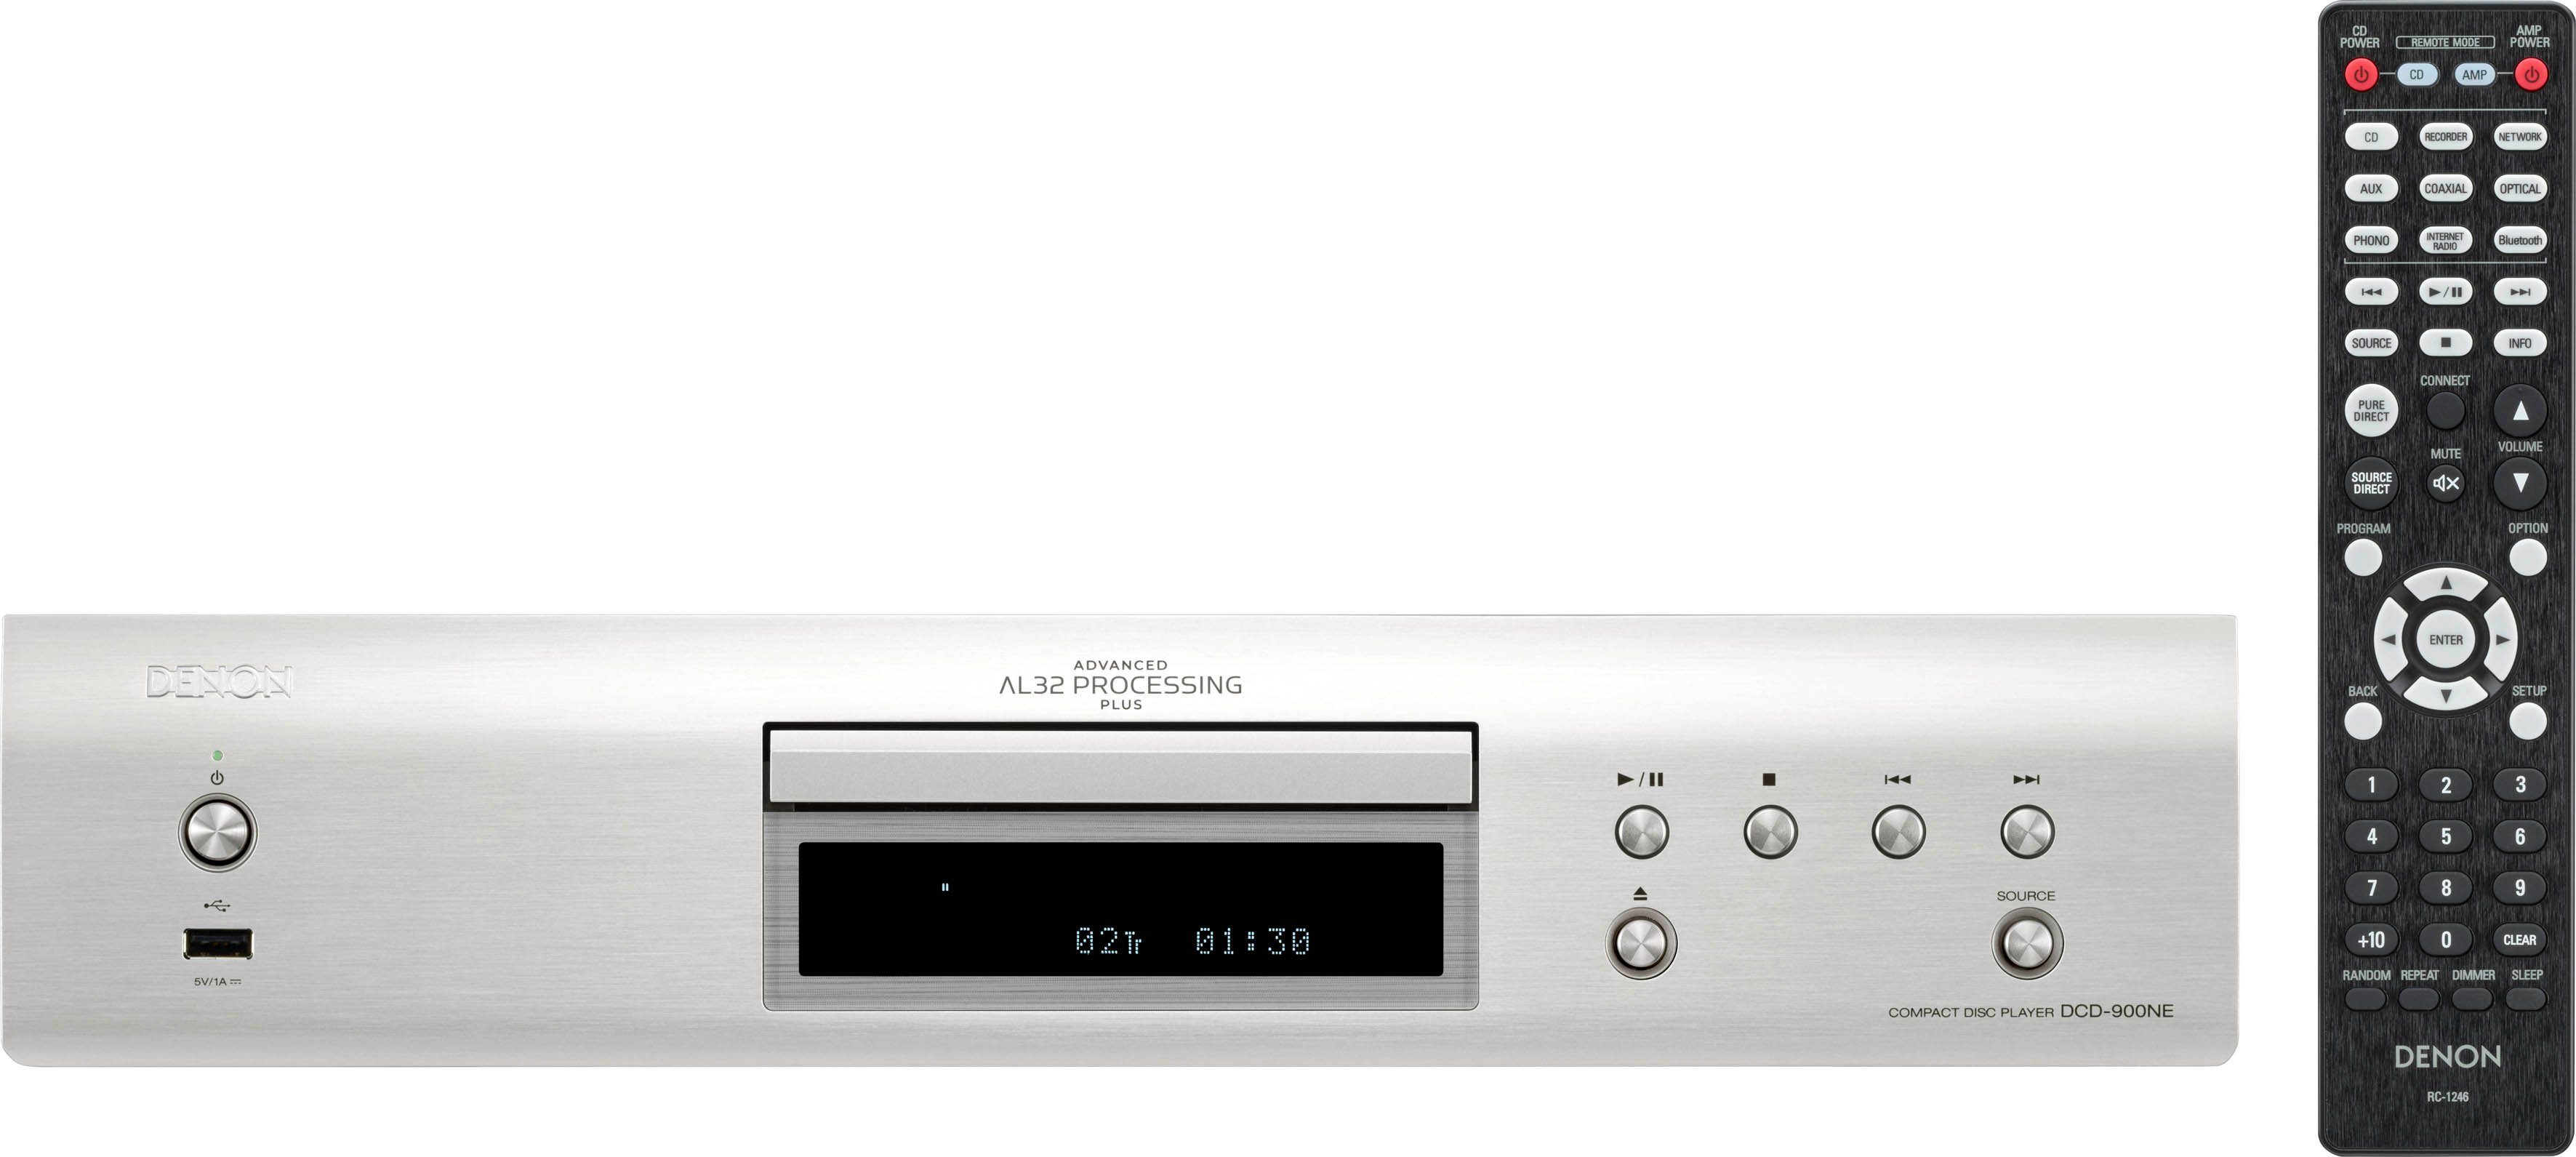 DCD-900NE Denon CD-Player (USB-Audiowiedergabe) silber